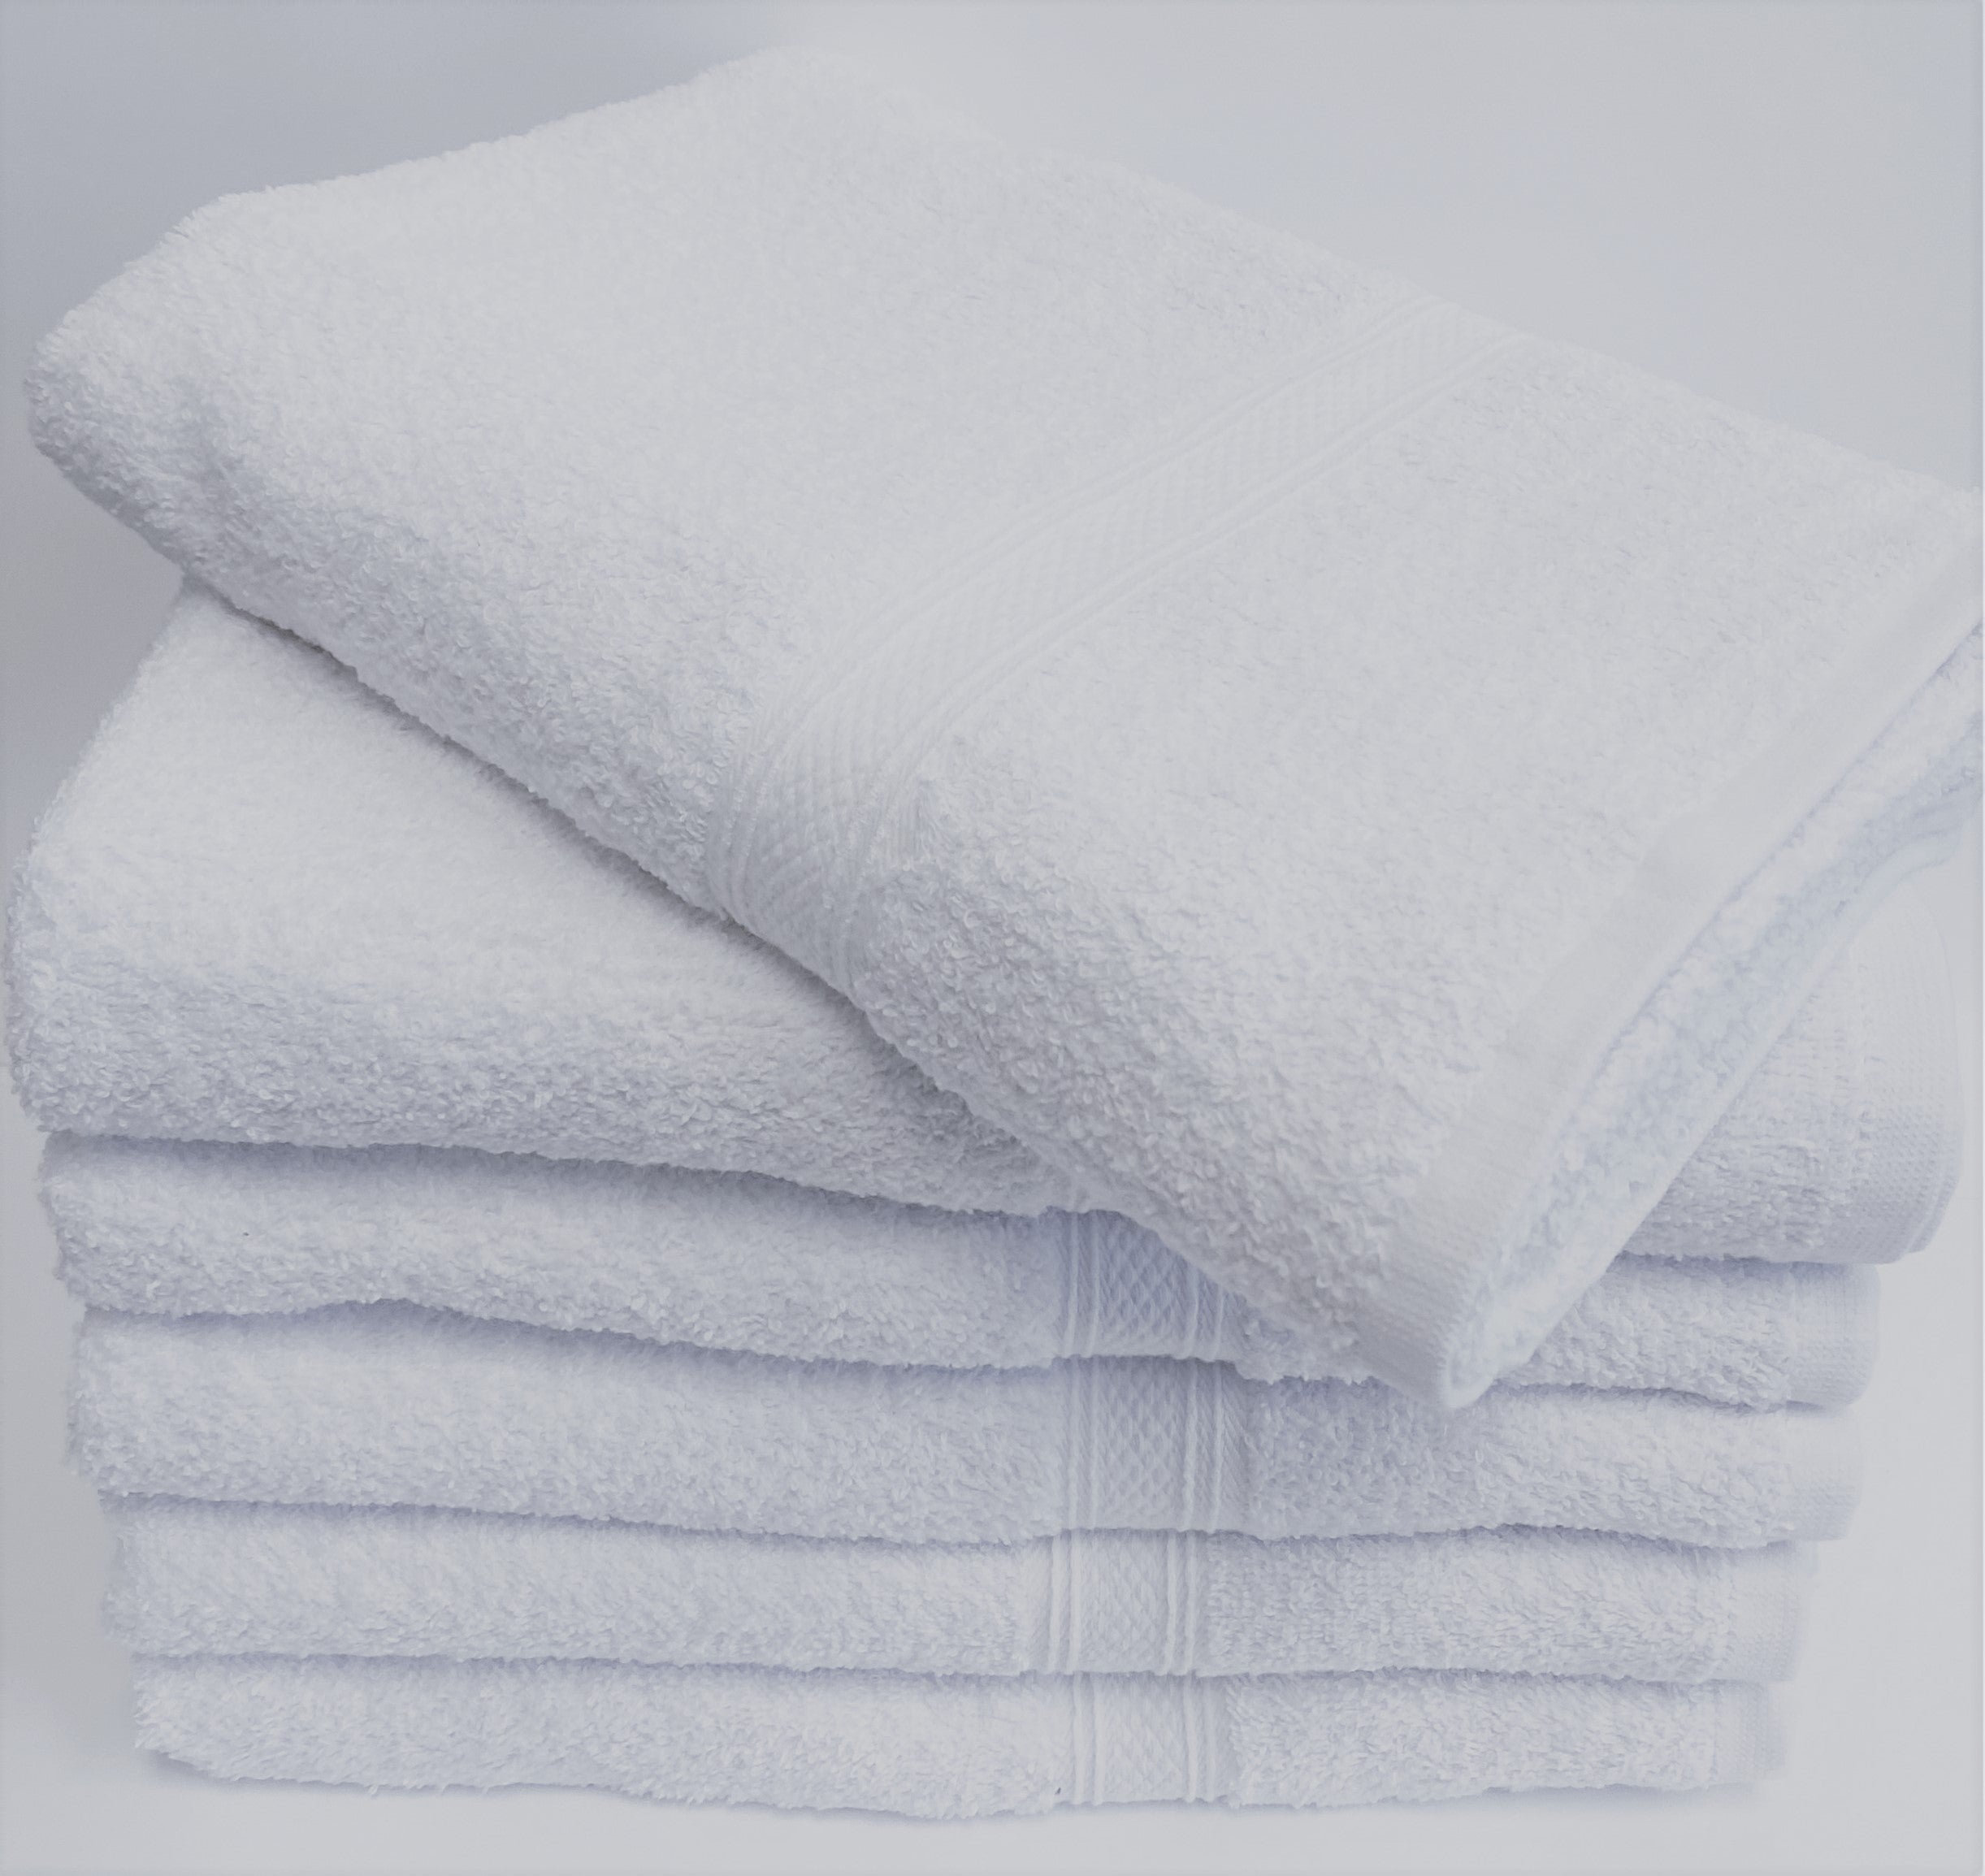 Soft Spun Cotton Polyester Blend Wholesale Towels